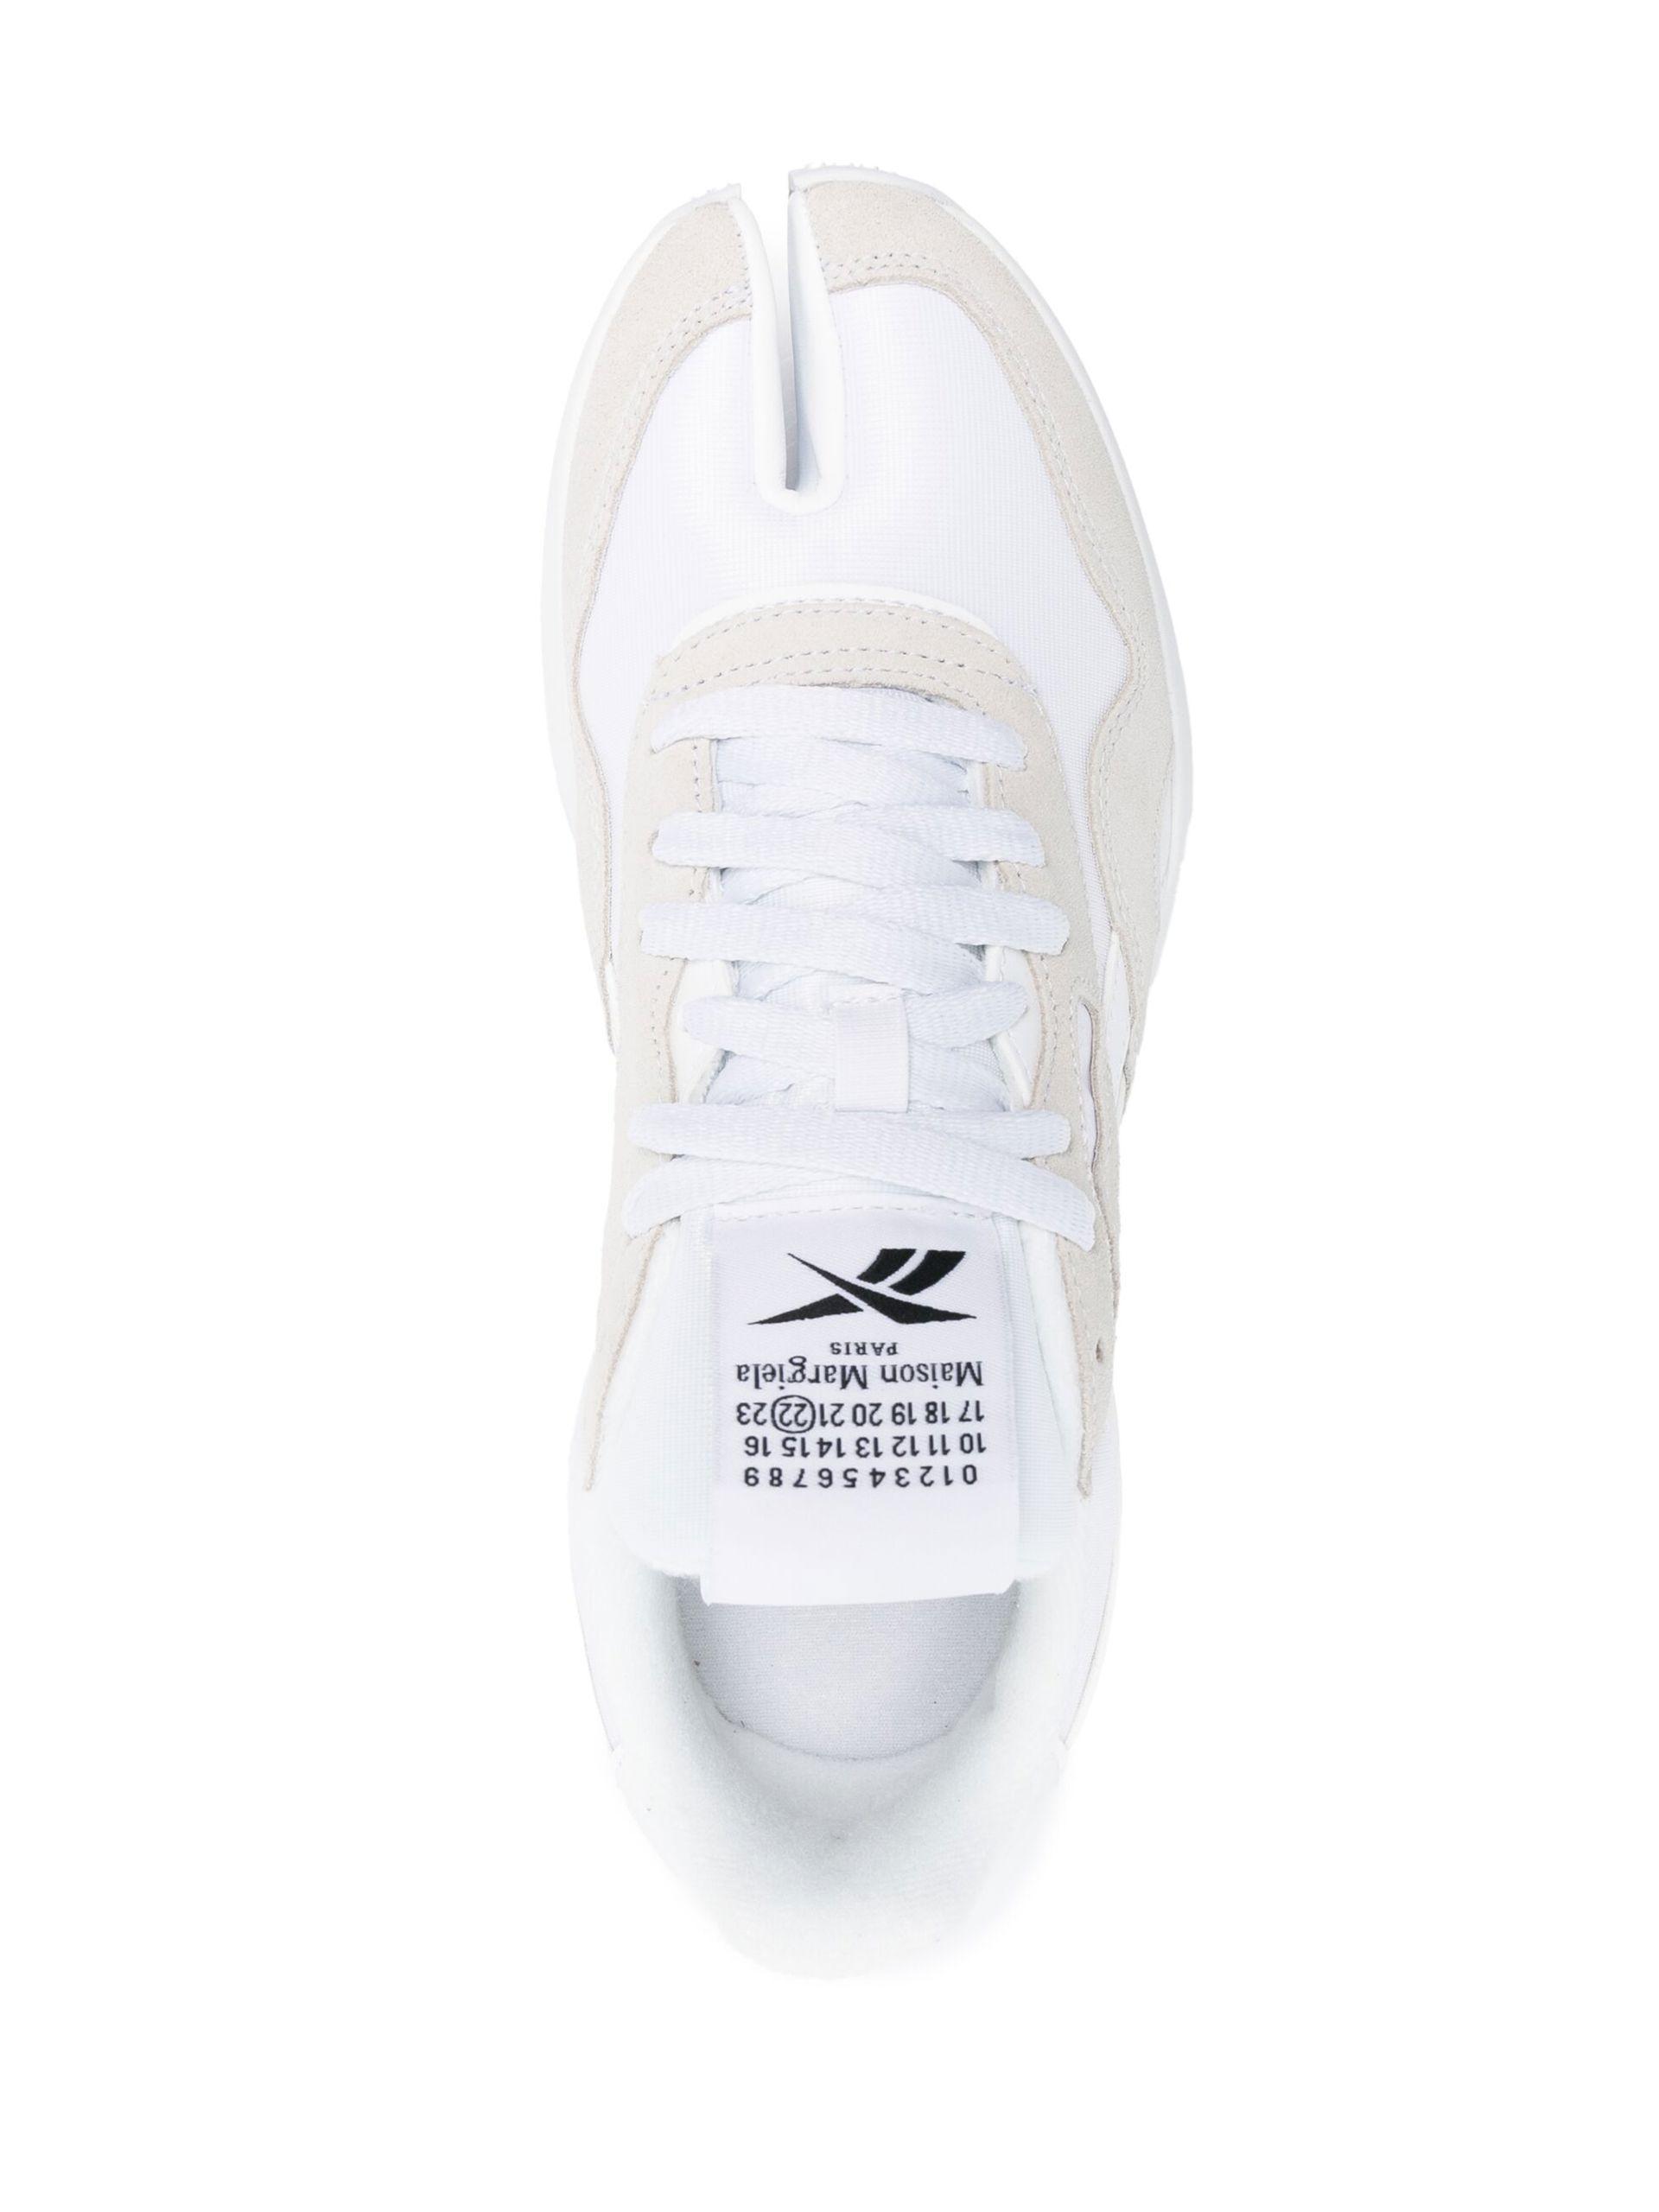 Reebok X Maison Margiela Classic Tabi Sneakers in White | Lyst